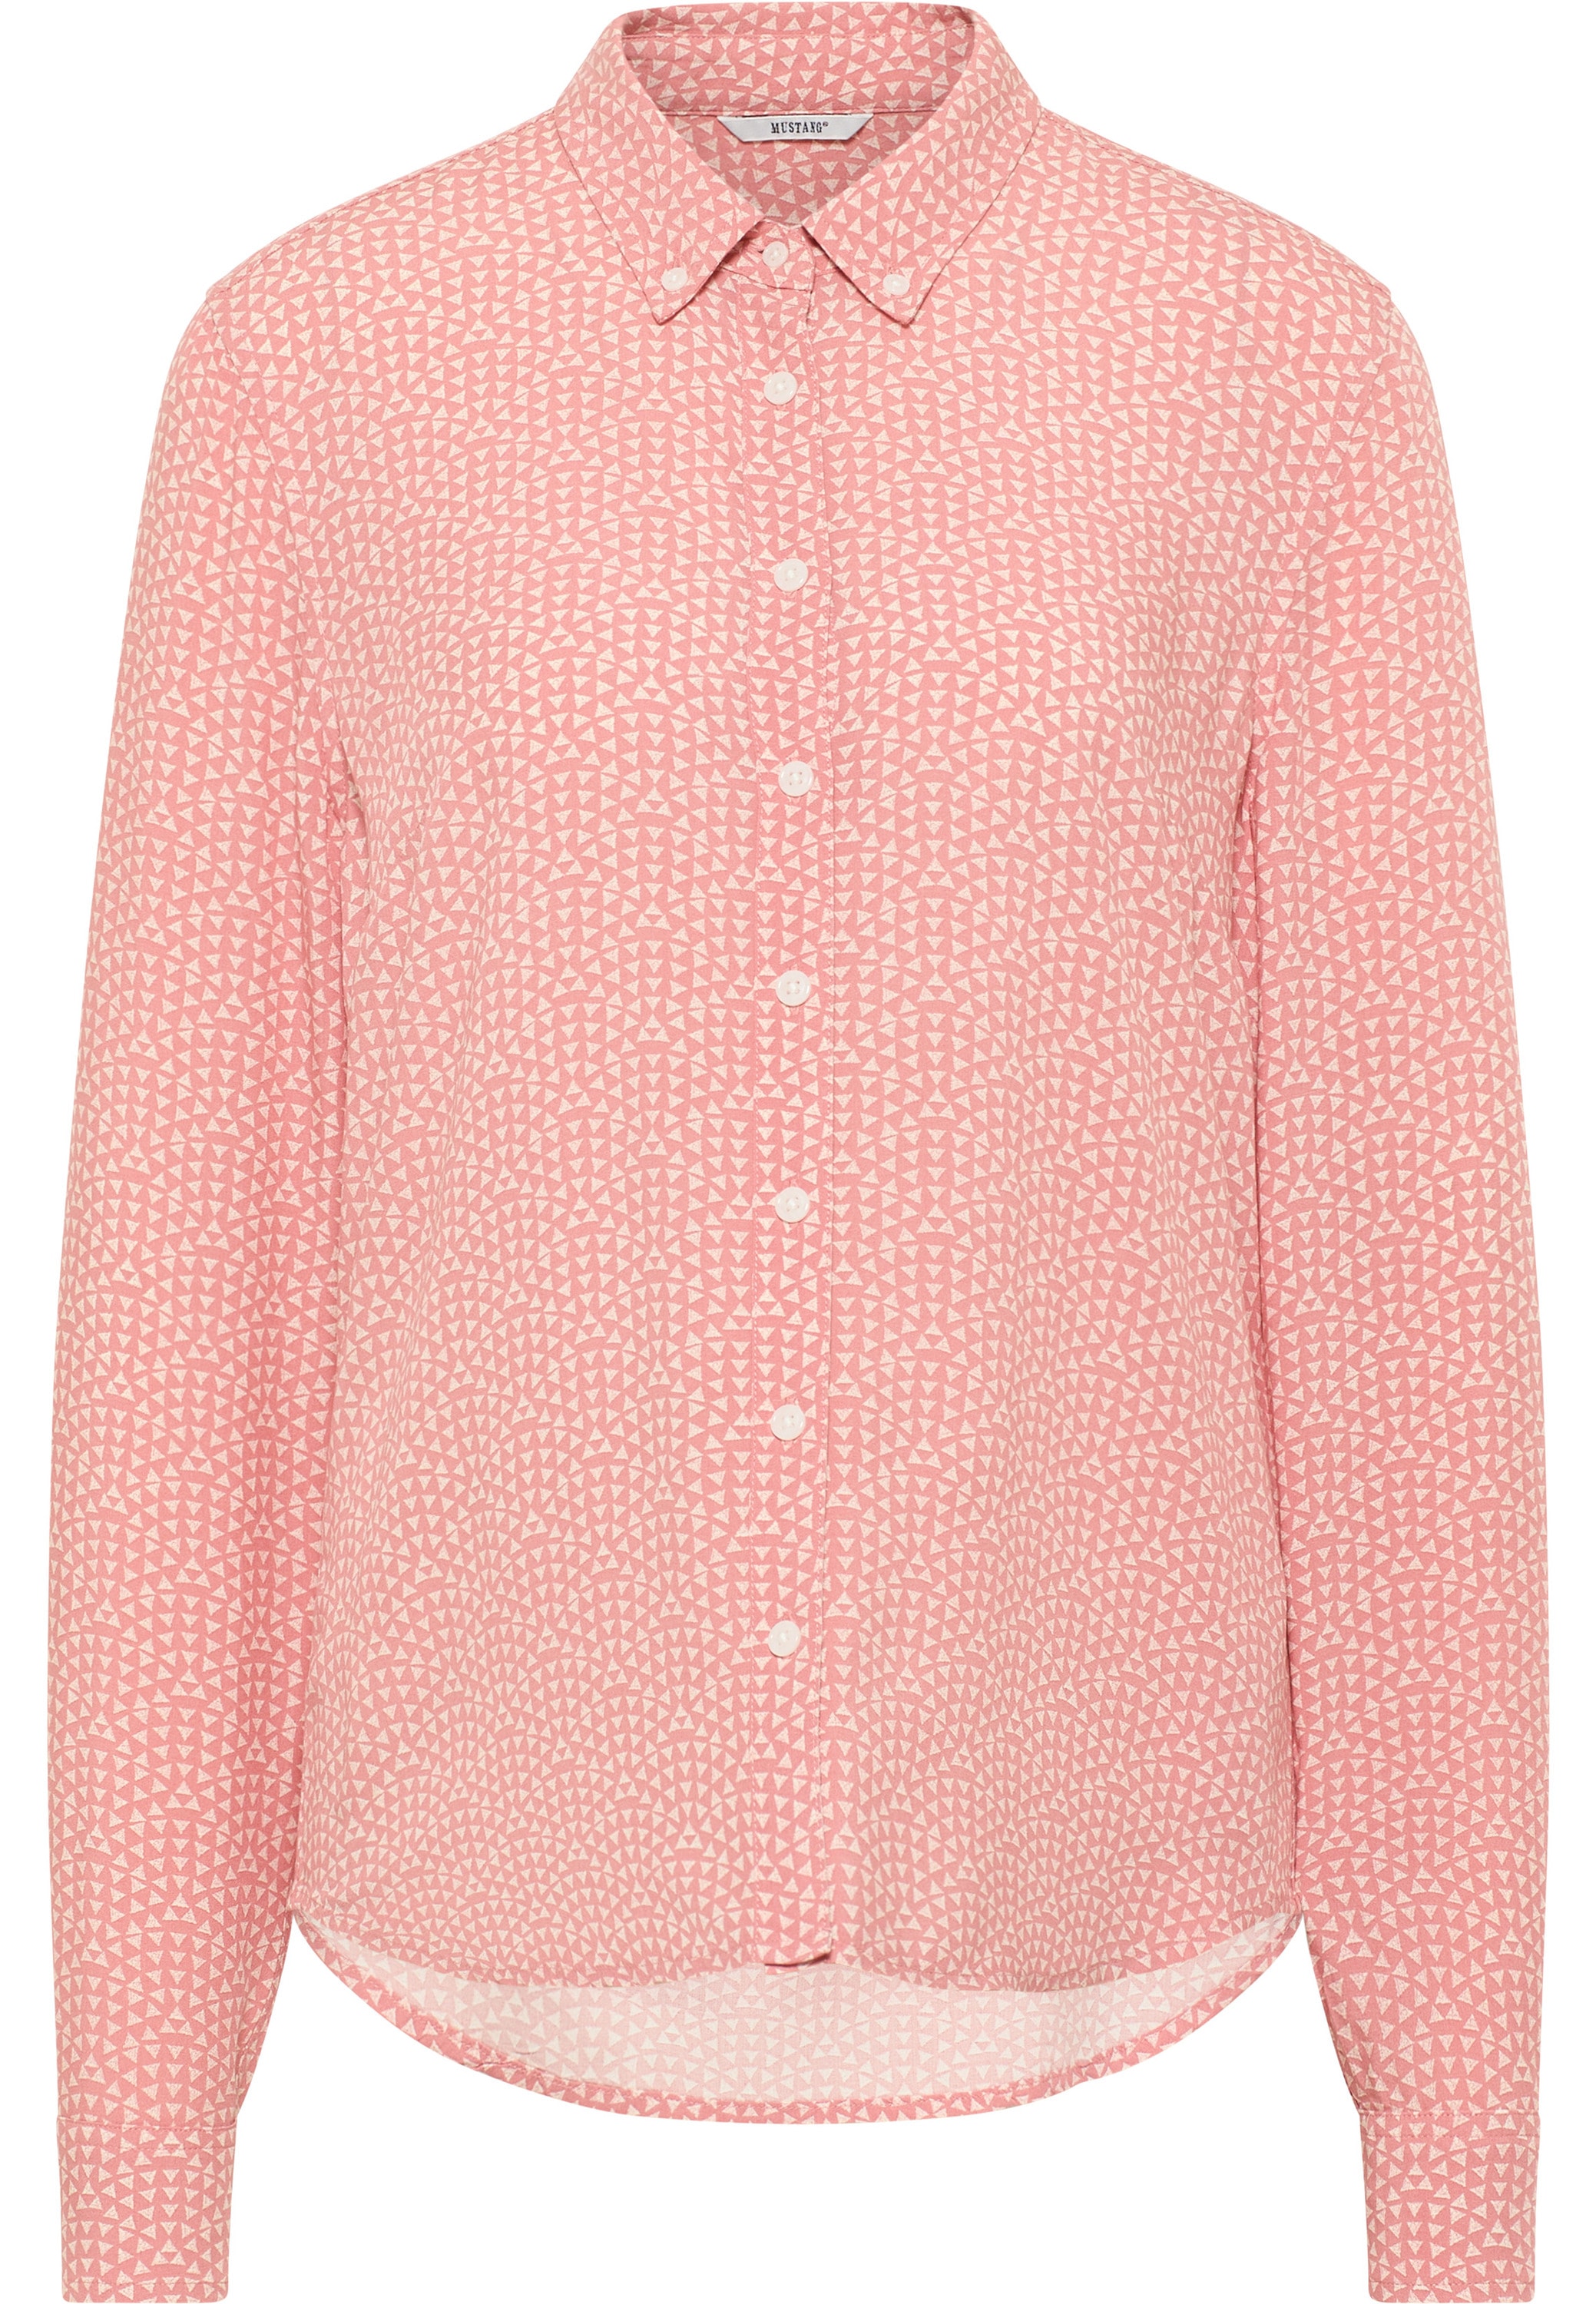 MUSTANG Langarmbluse »Bluse« kaufen im OTTO Online Shop